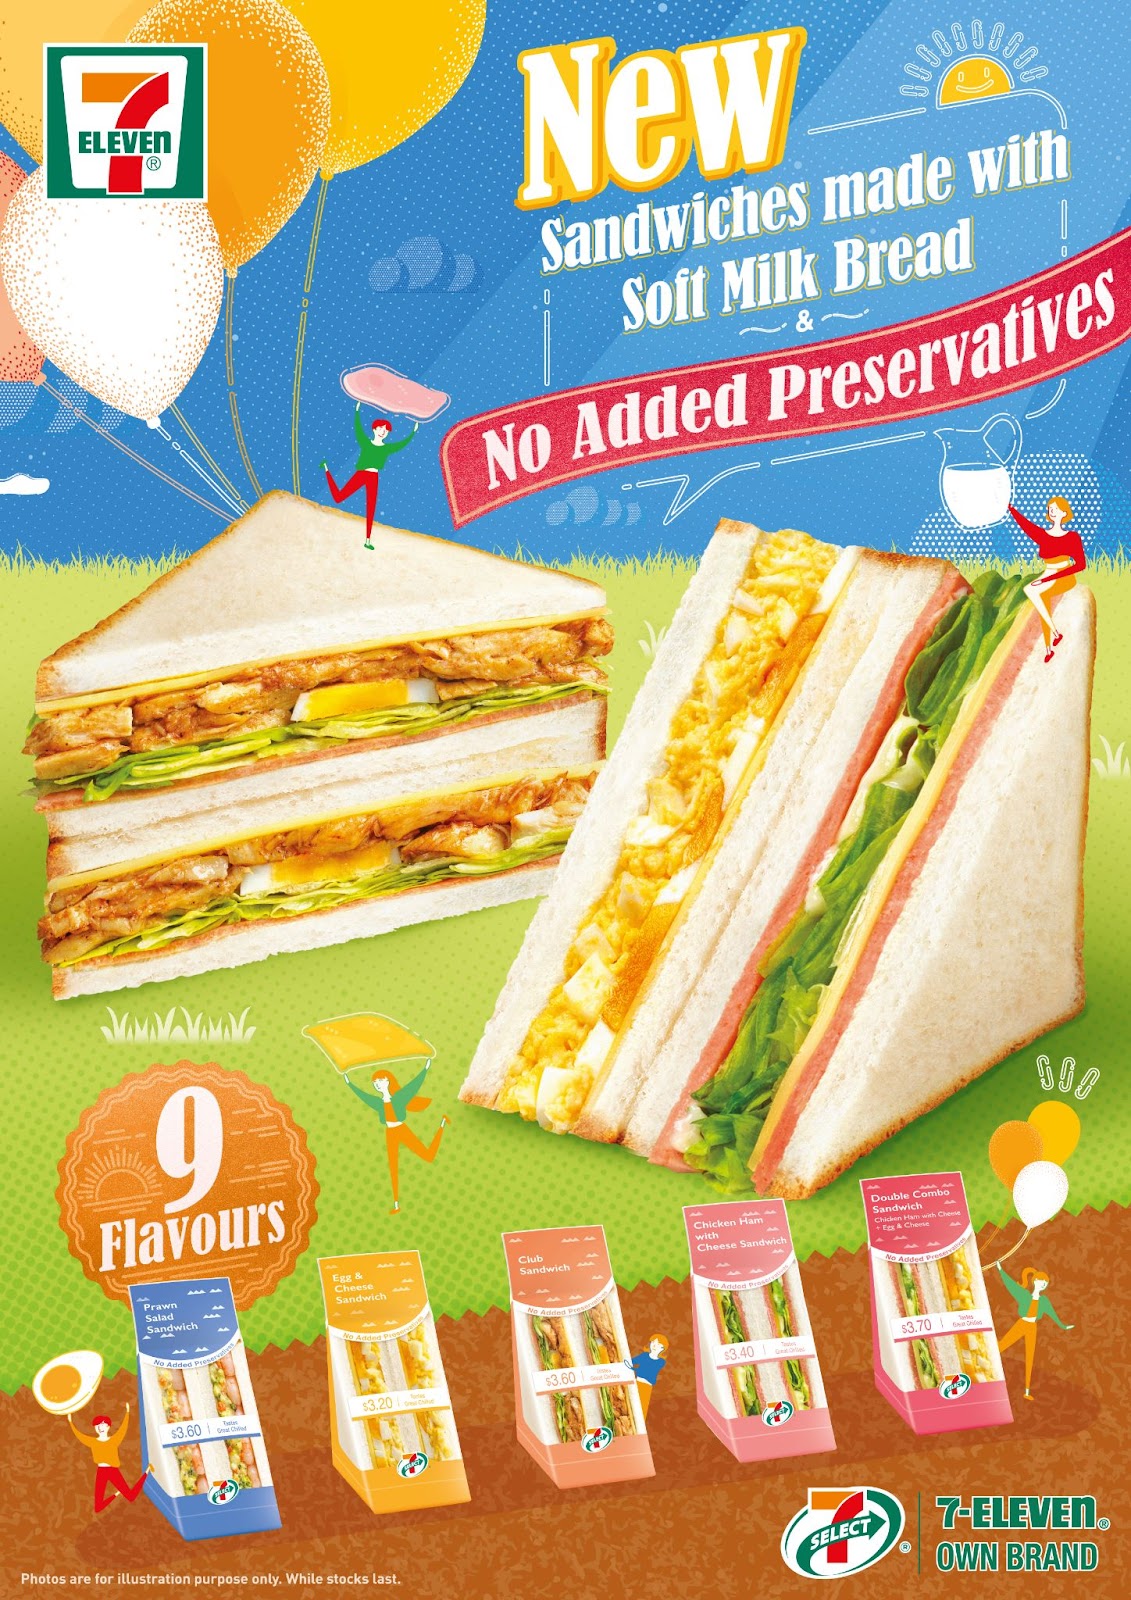 Soft Milk Bread, No Added Preservatives and Halal-certified: 7-Eleven’s New Sandwich Range - Alvinology